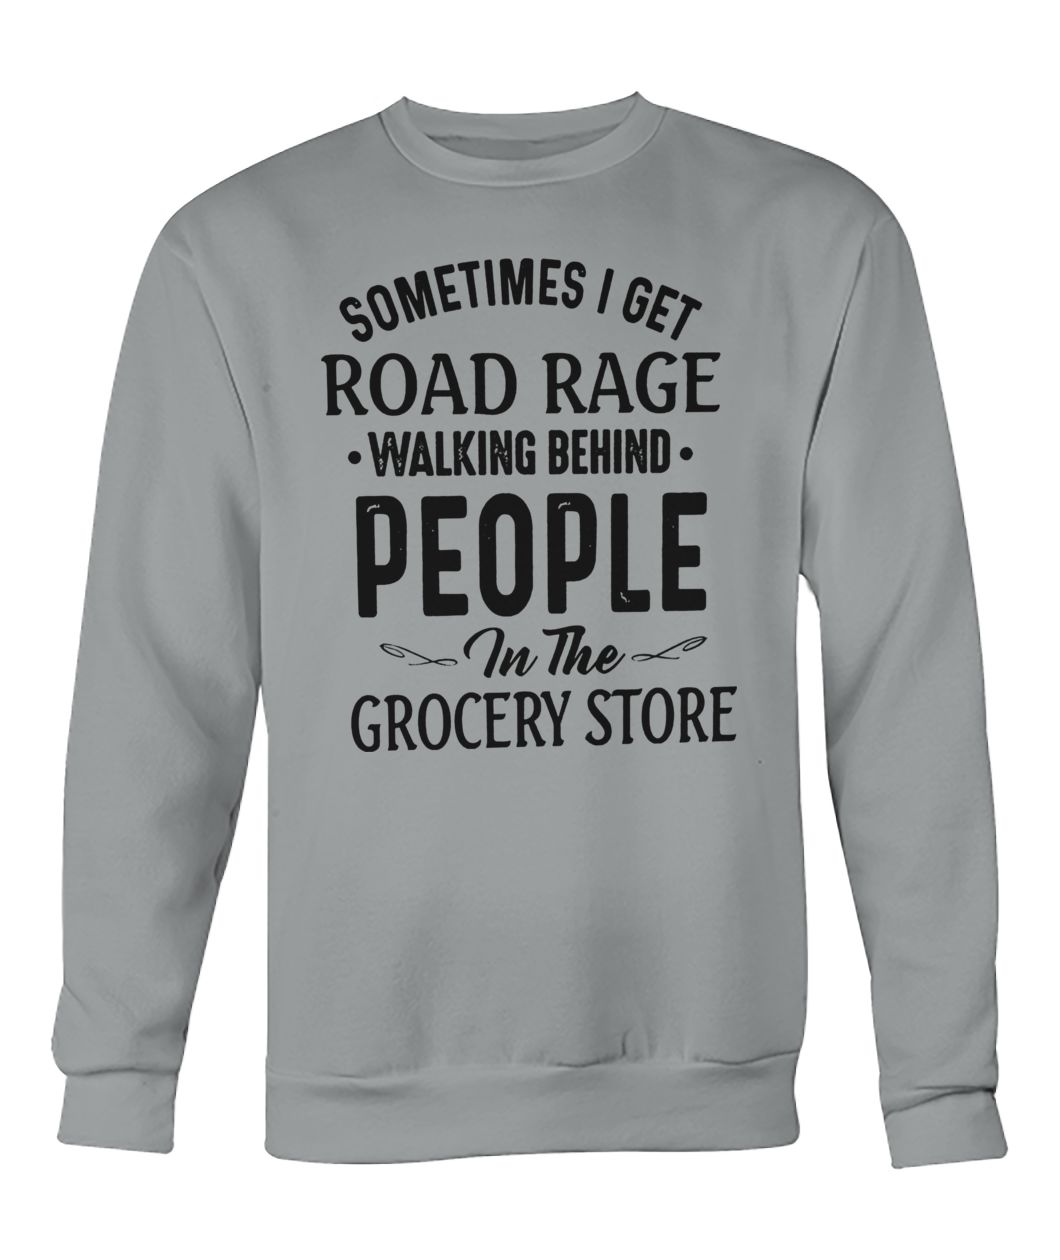 Sometimes I get road rage walking behind people in the grocery store crew neck sweatshirt